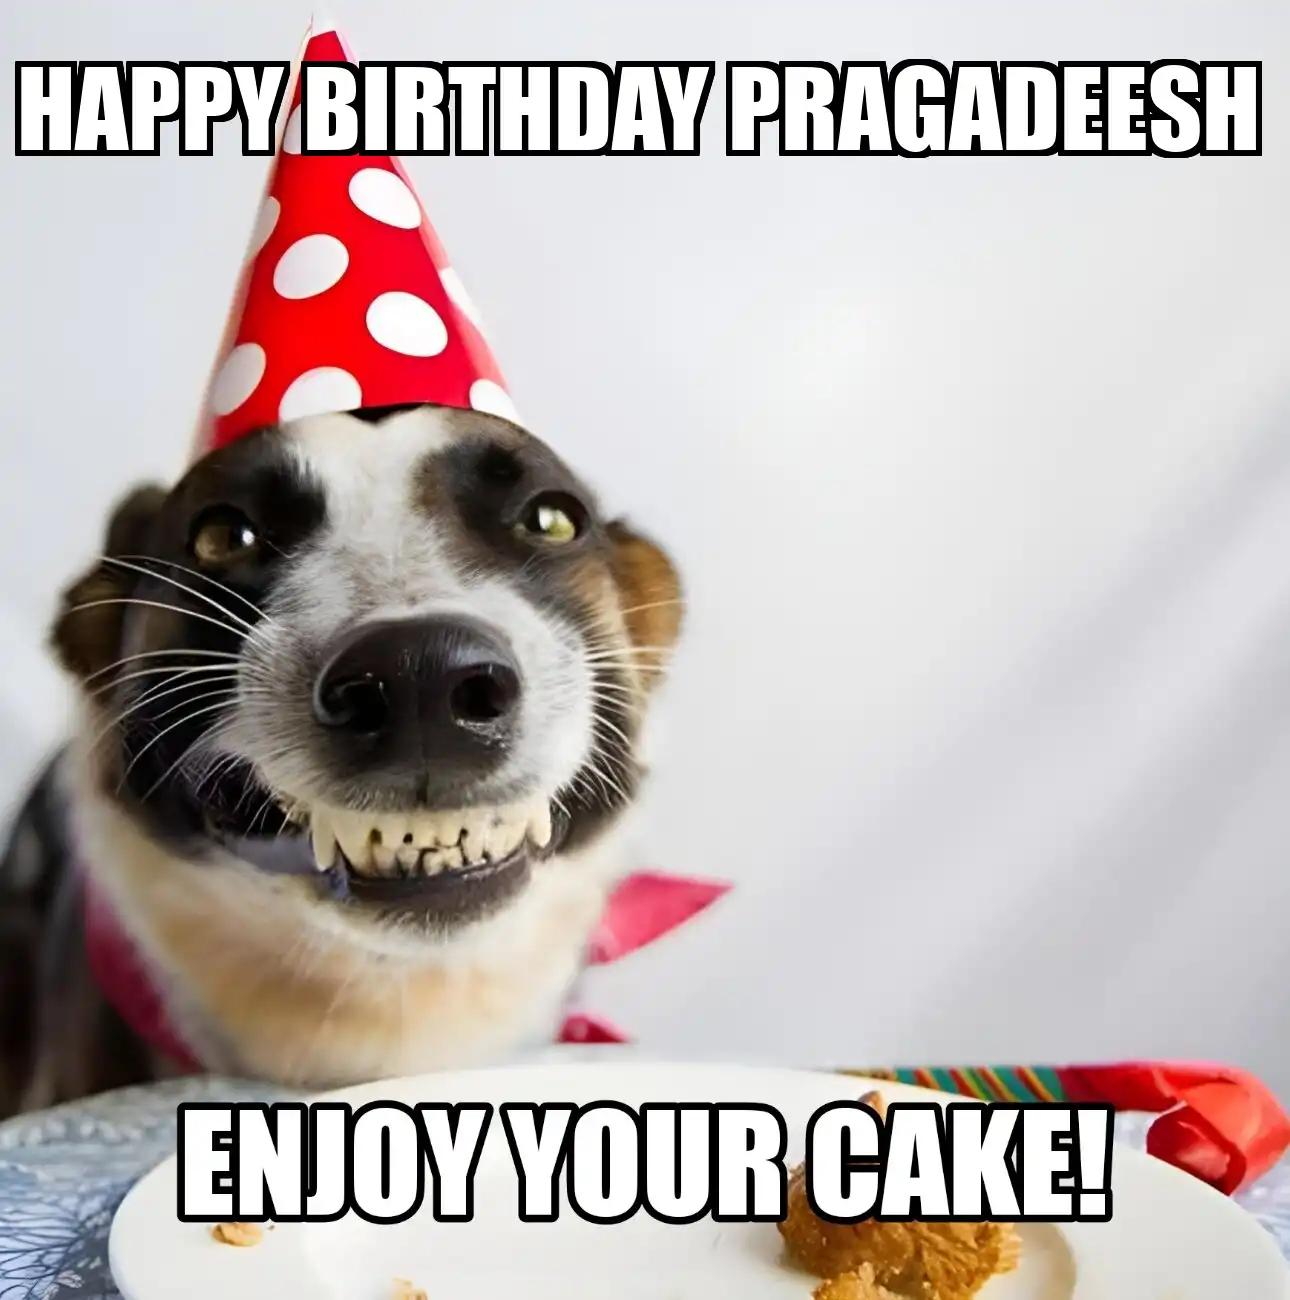 Happy Birthday Pragadeesh Enjoy Your Cake Dog Meme